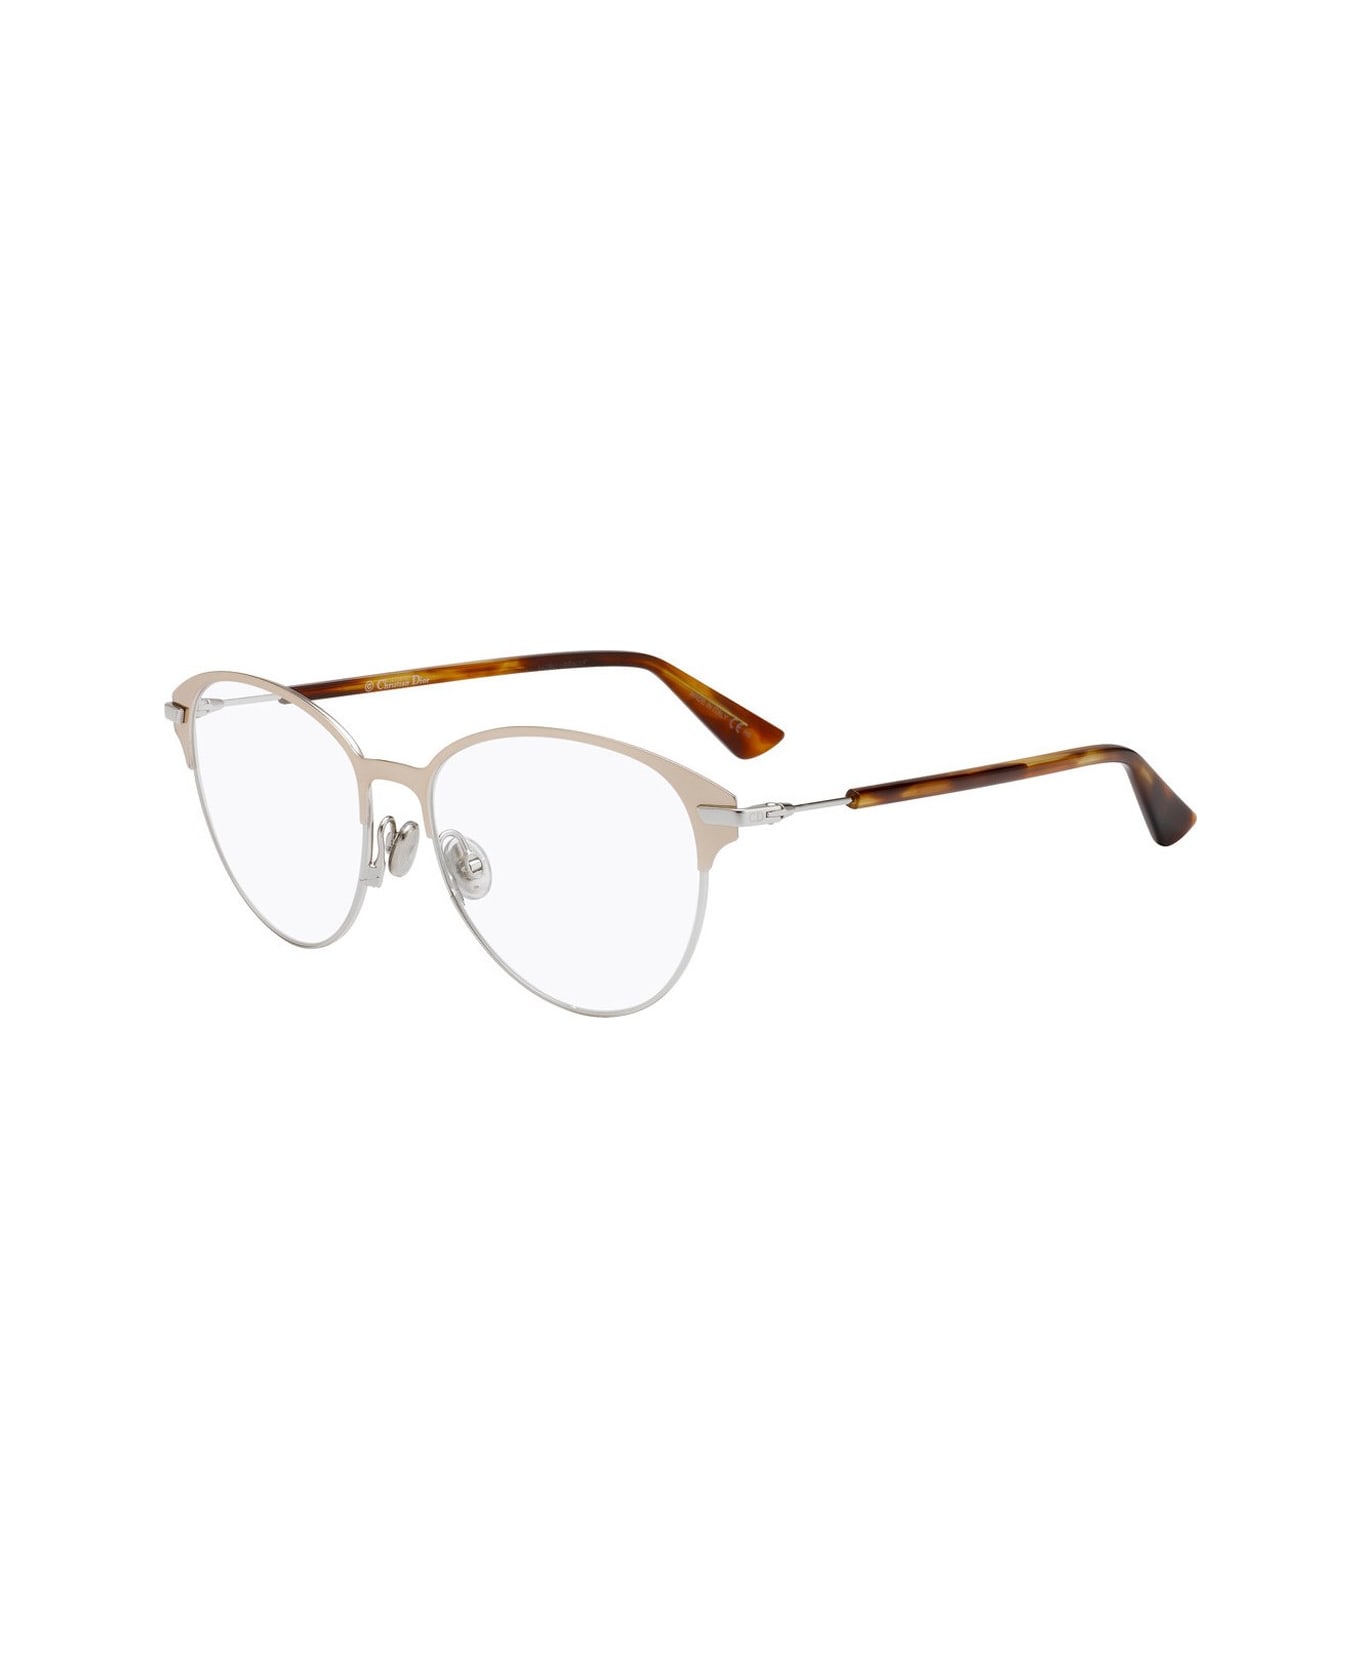 Dior Eyewear Essence14 Glasses - Oro